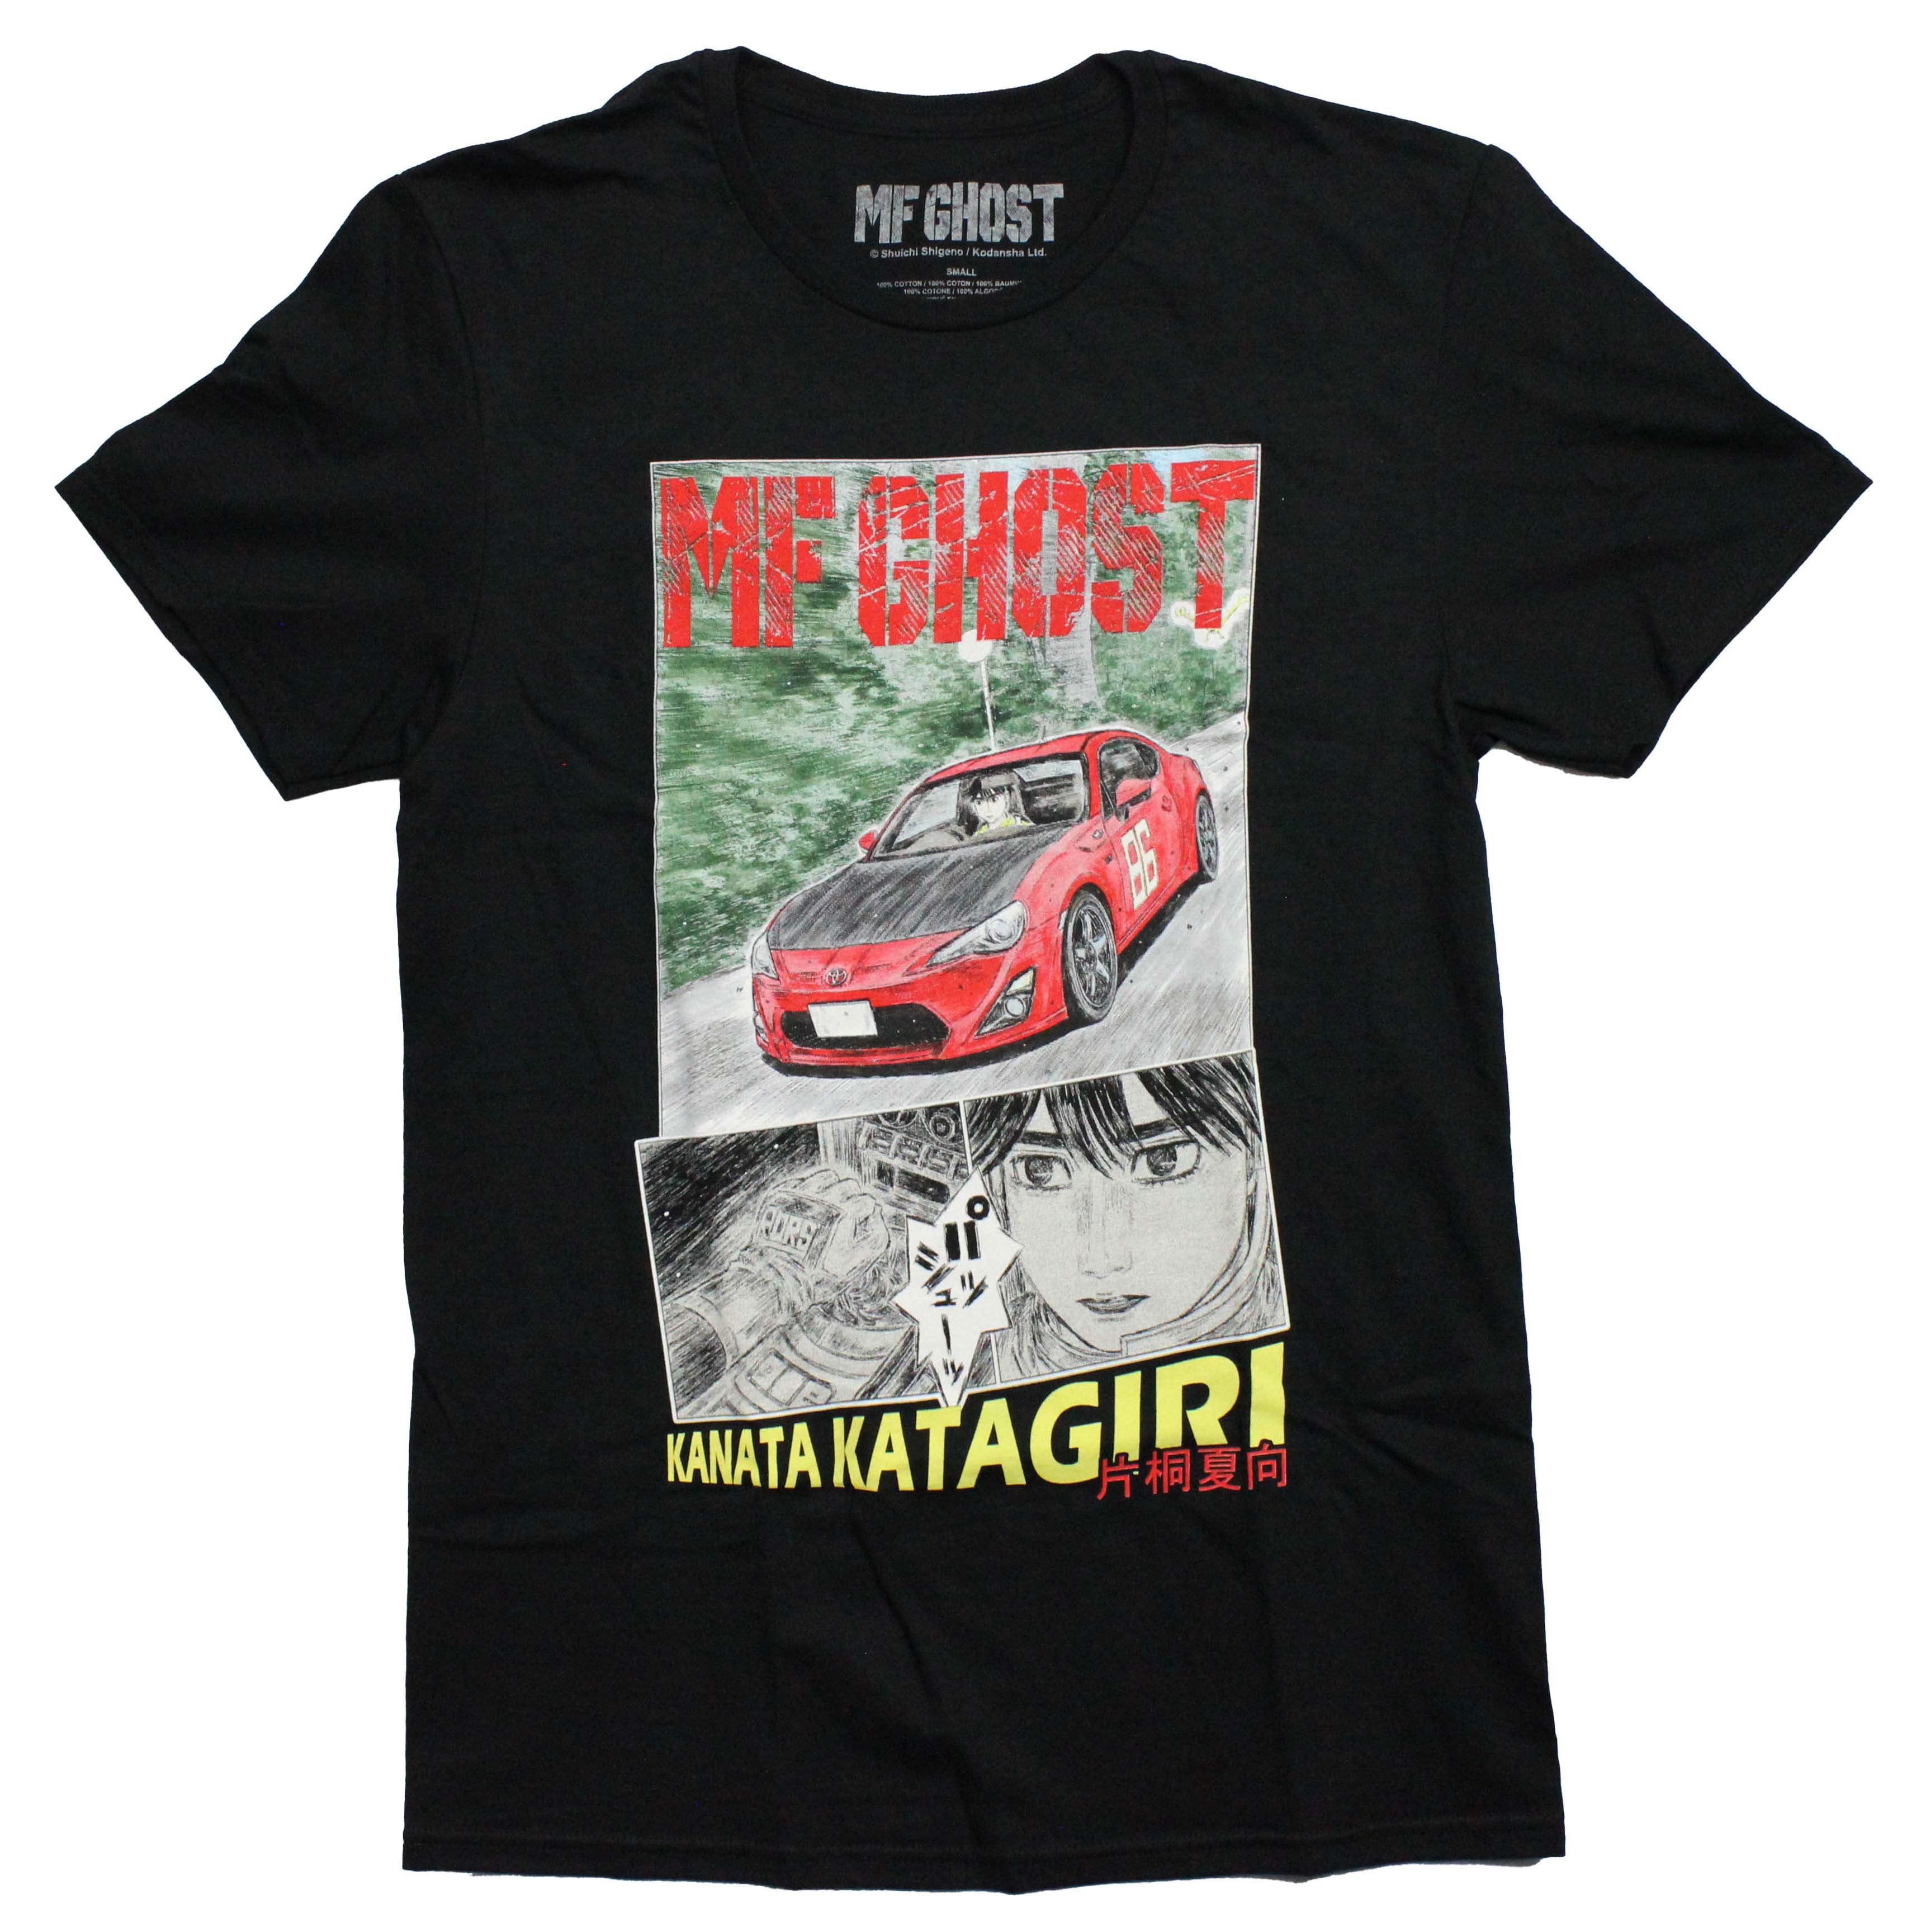 MF Ghost Mens T-Shirt - Kanata Kata Girl Manga Images